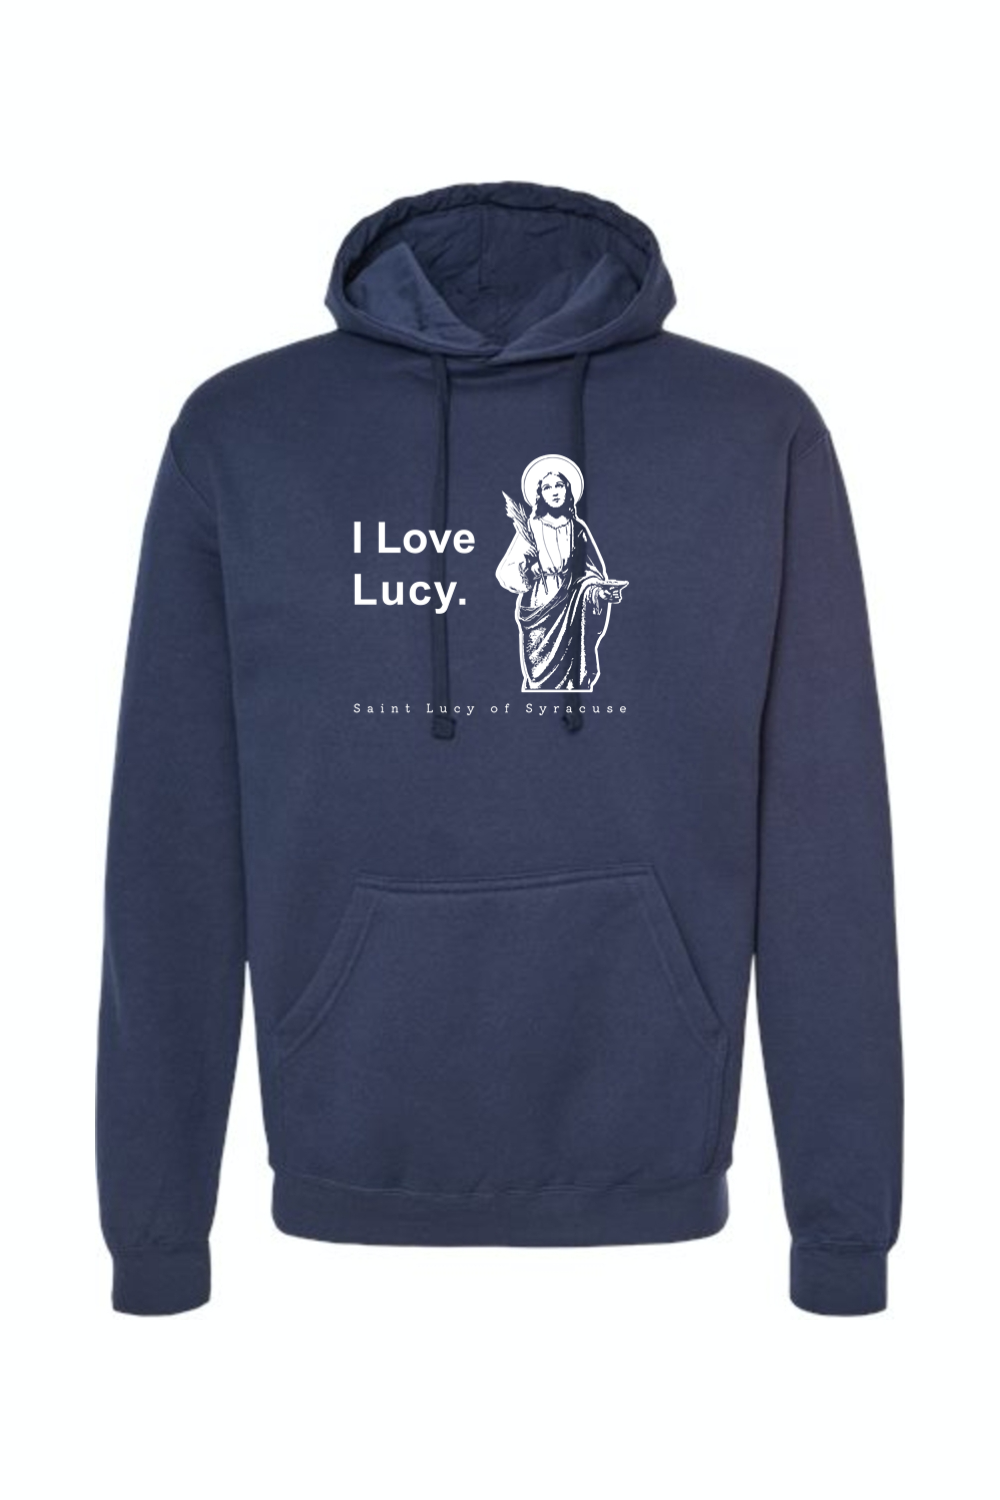 I Love Lucy - St Lucy of Syracuse Hoodie Sweatshirt